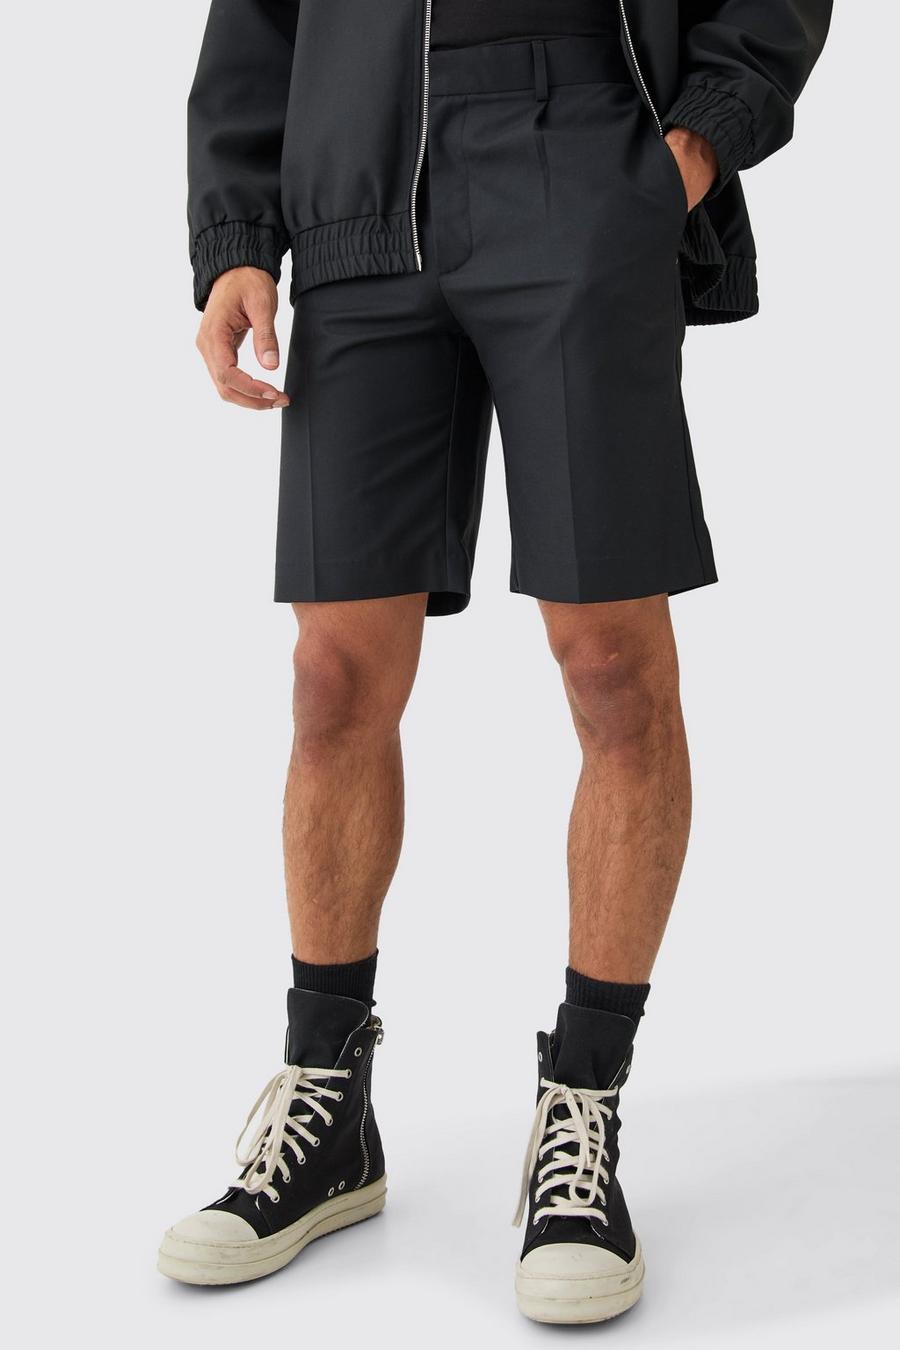 Lockere Shorts, Black